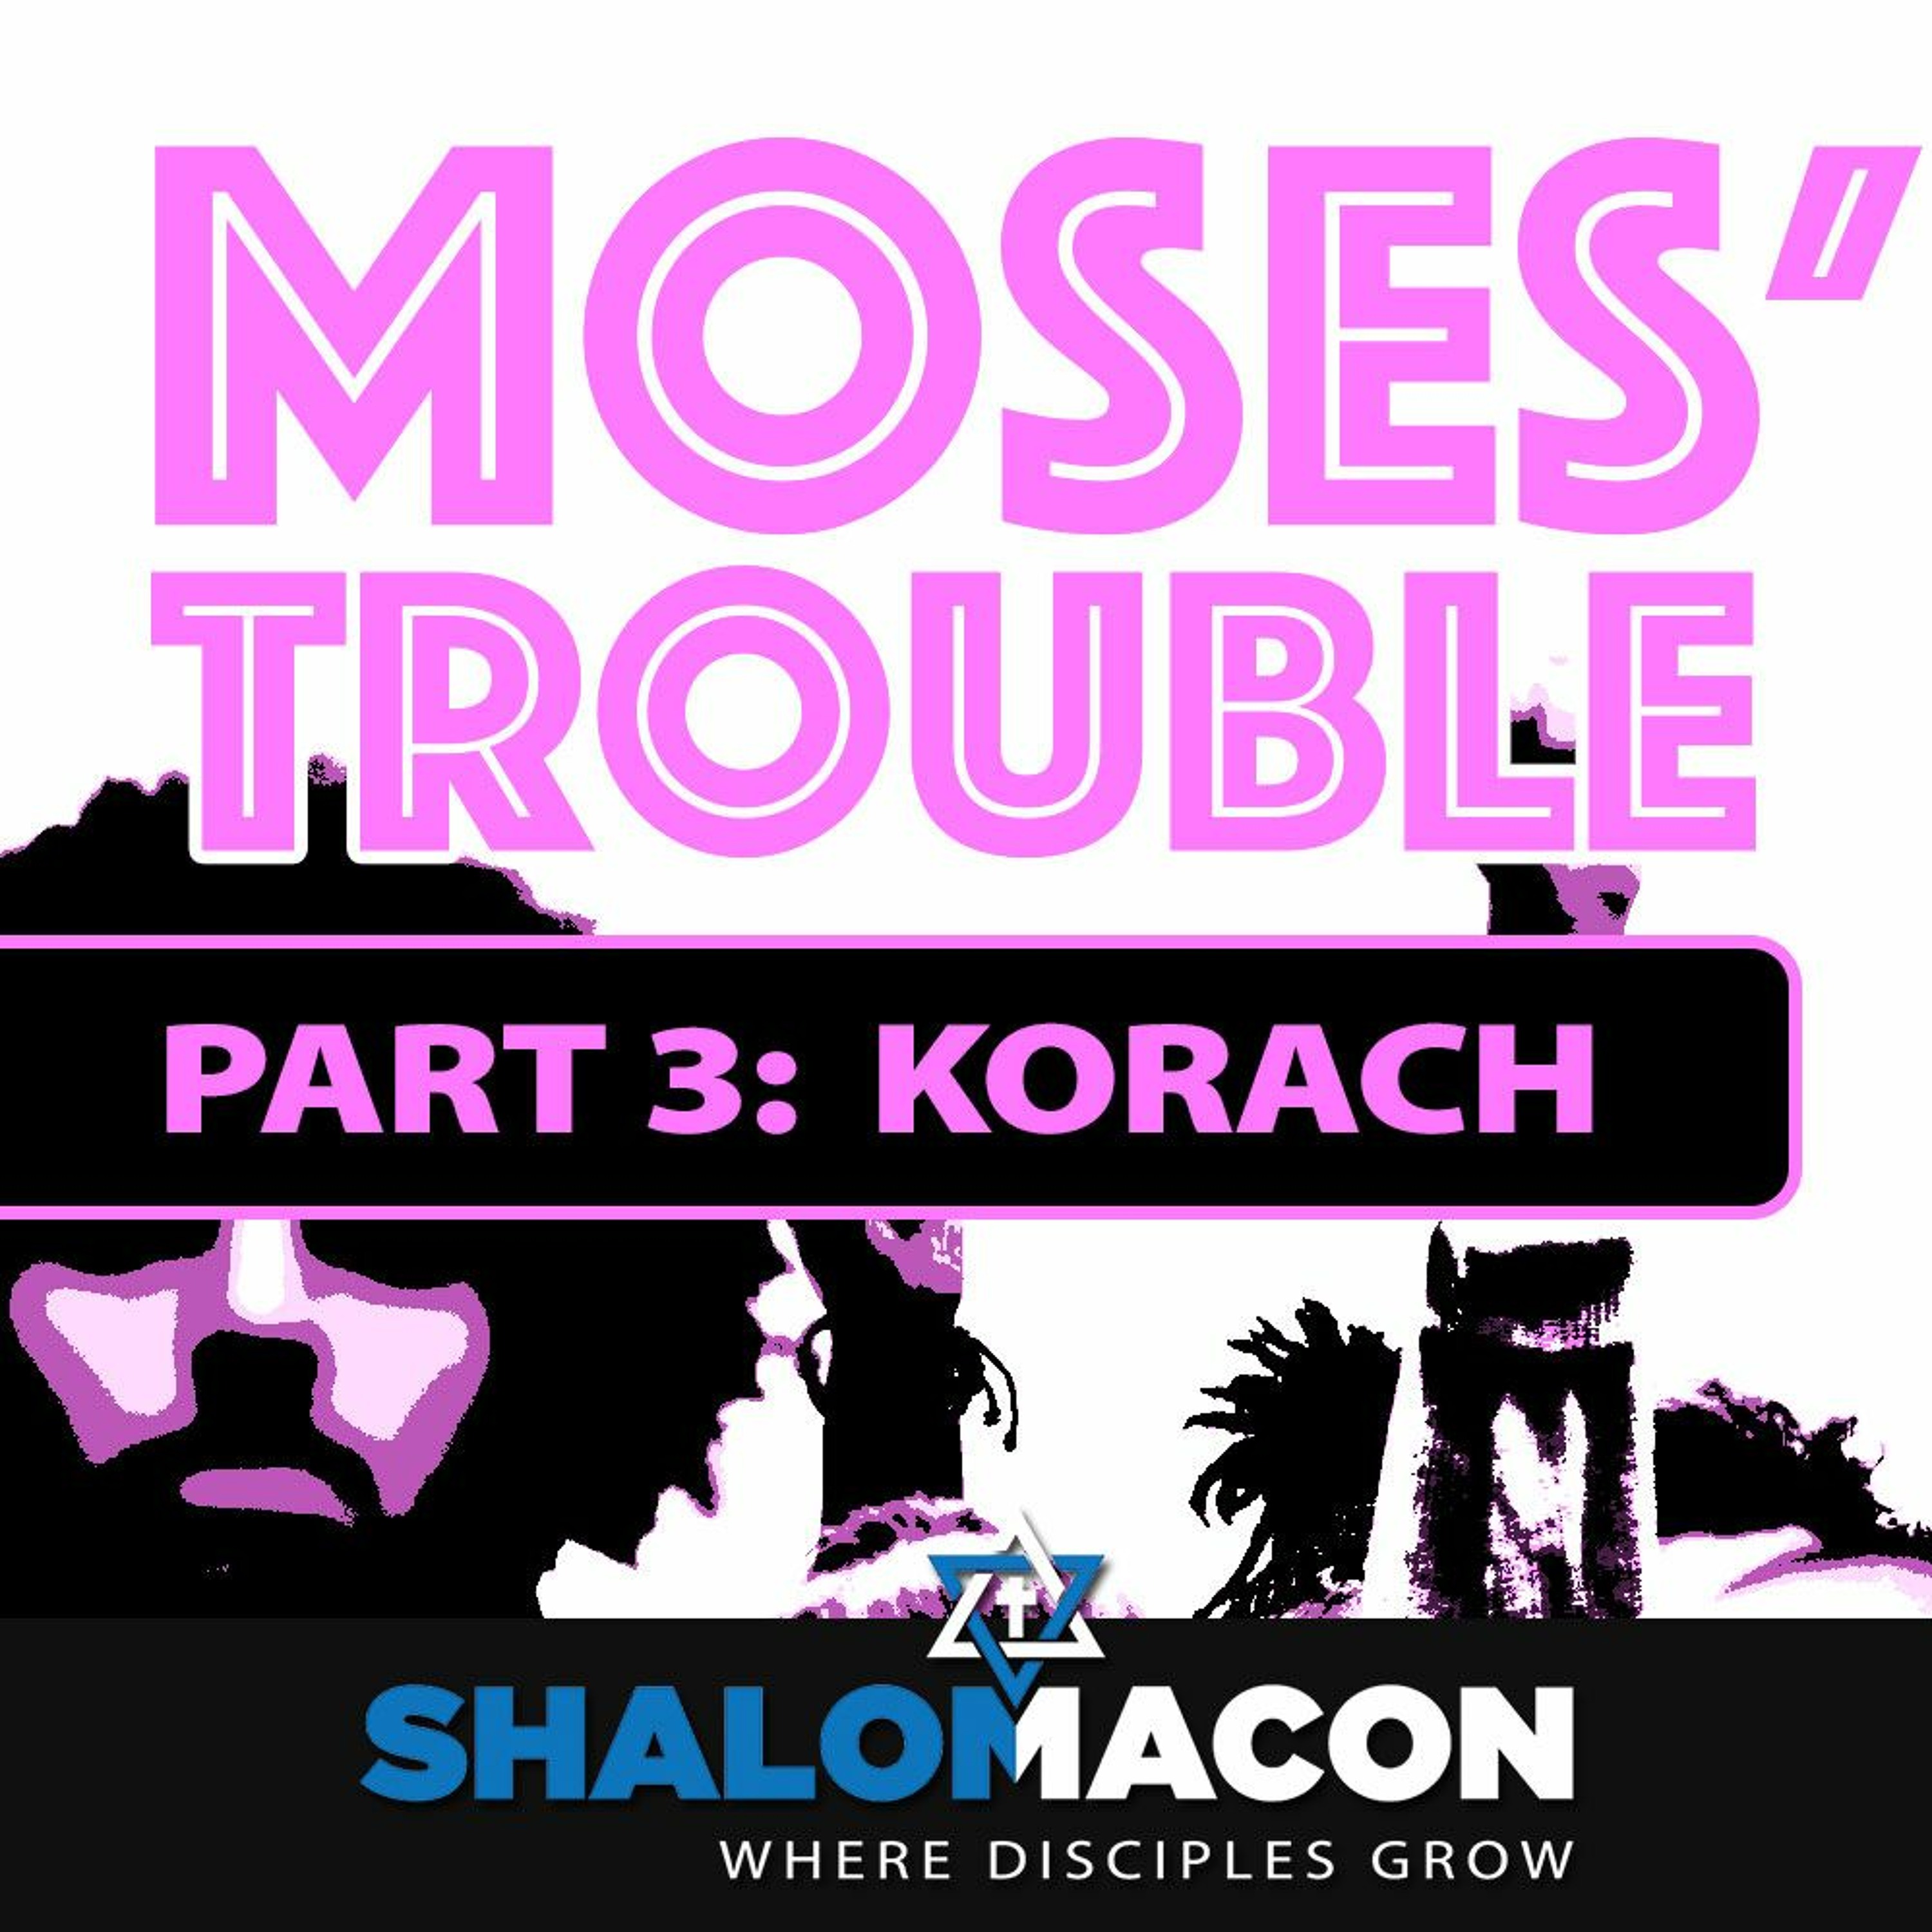 Moses Trouble - Part 3: Korach